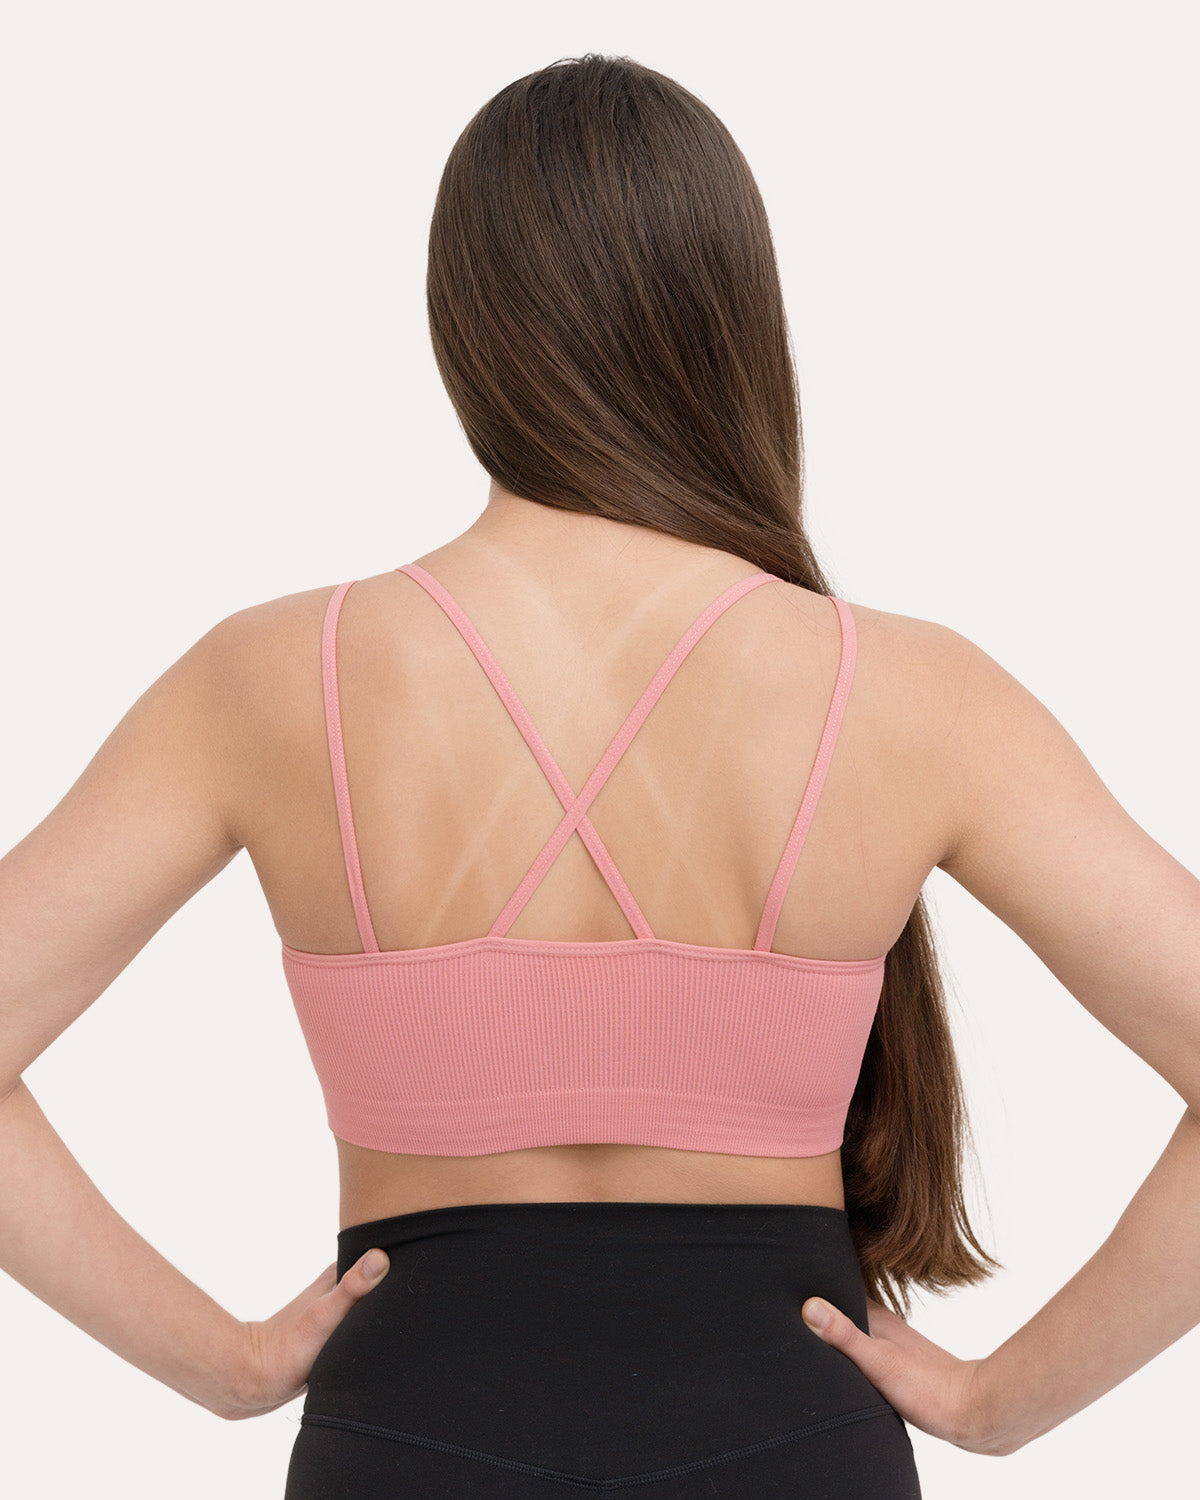 women's Lily of France pink crosse back sports bra size medium MRSP $36